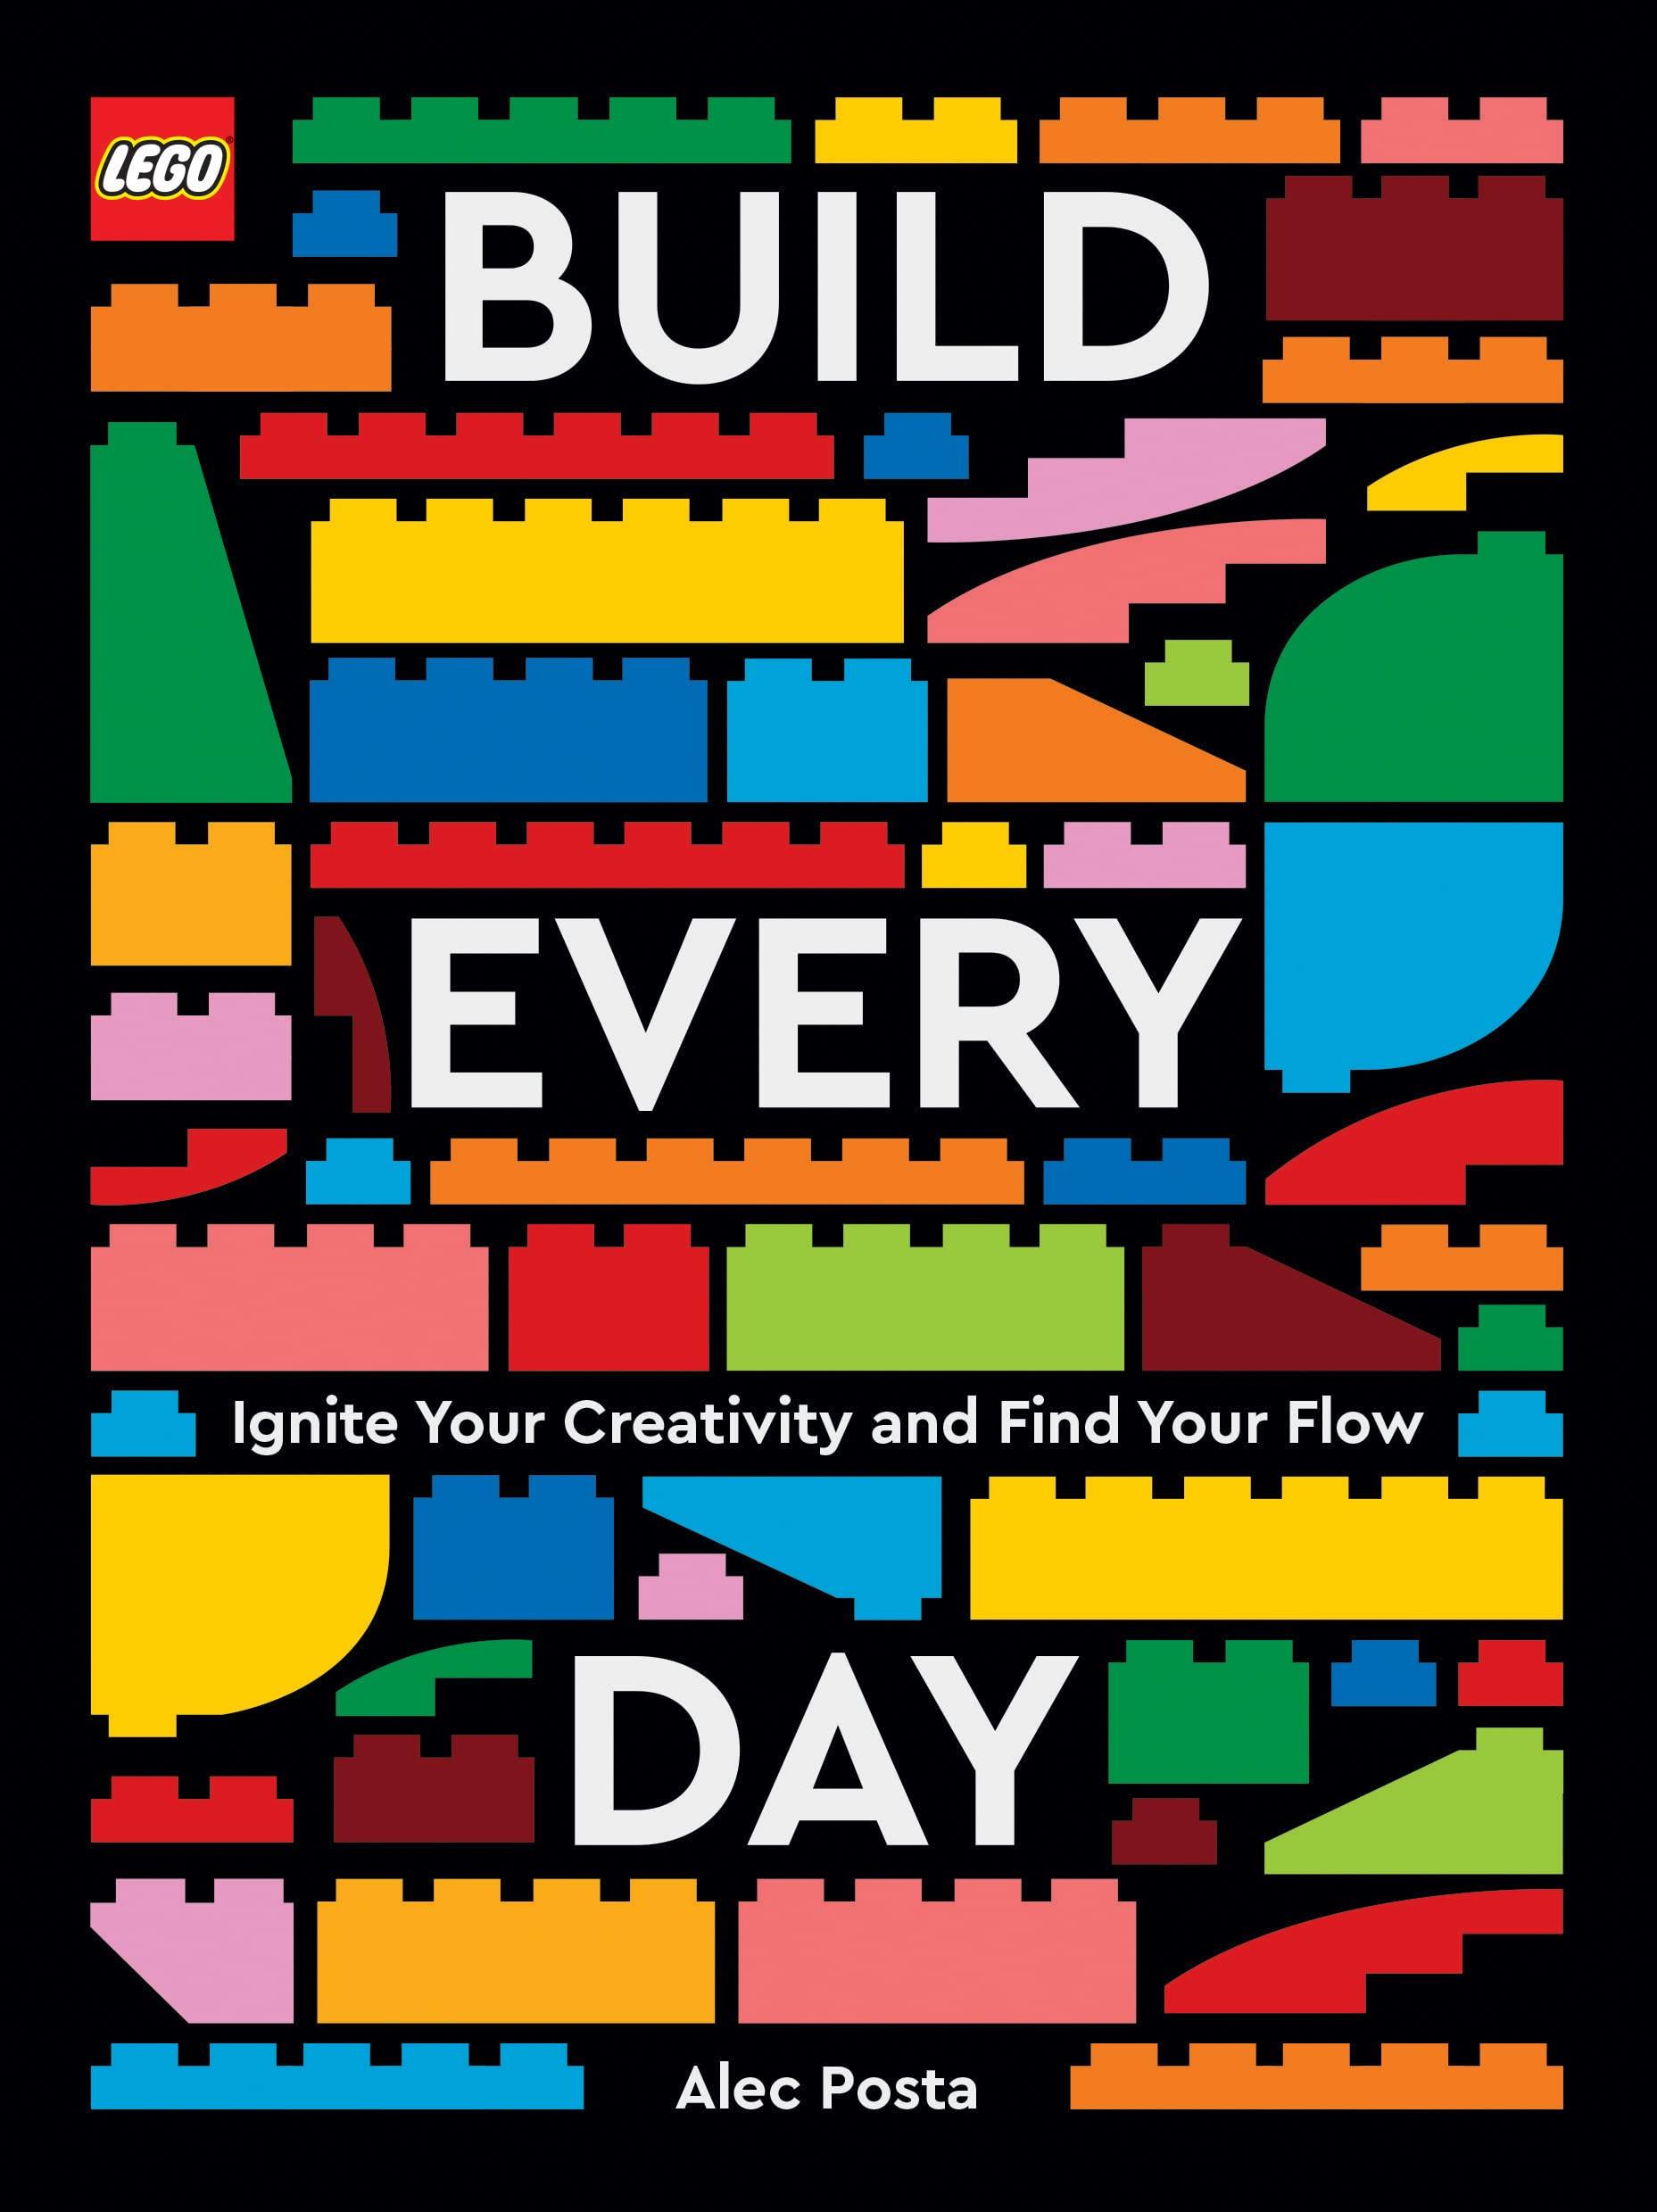 LEGO Build Every Day BrickEconomy